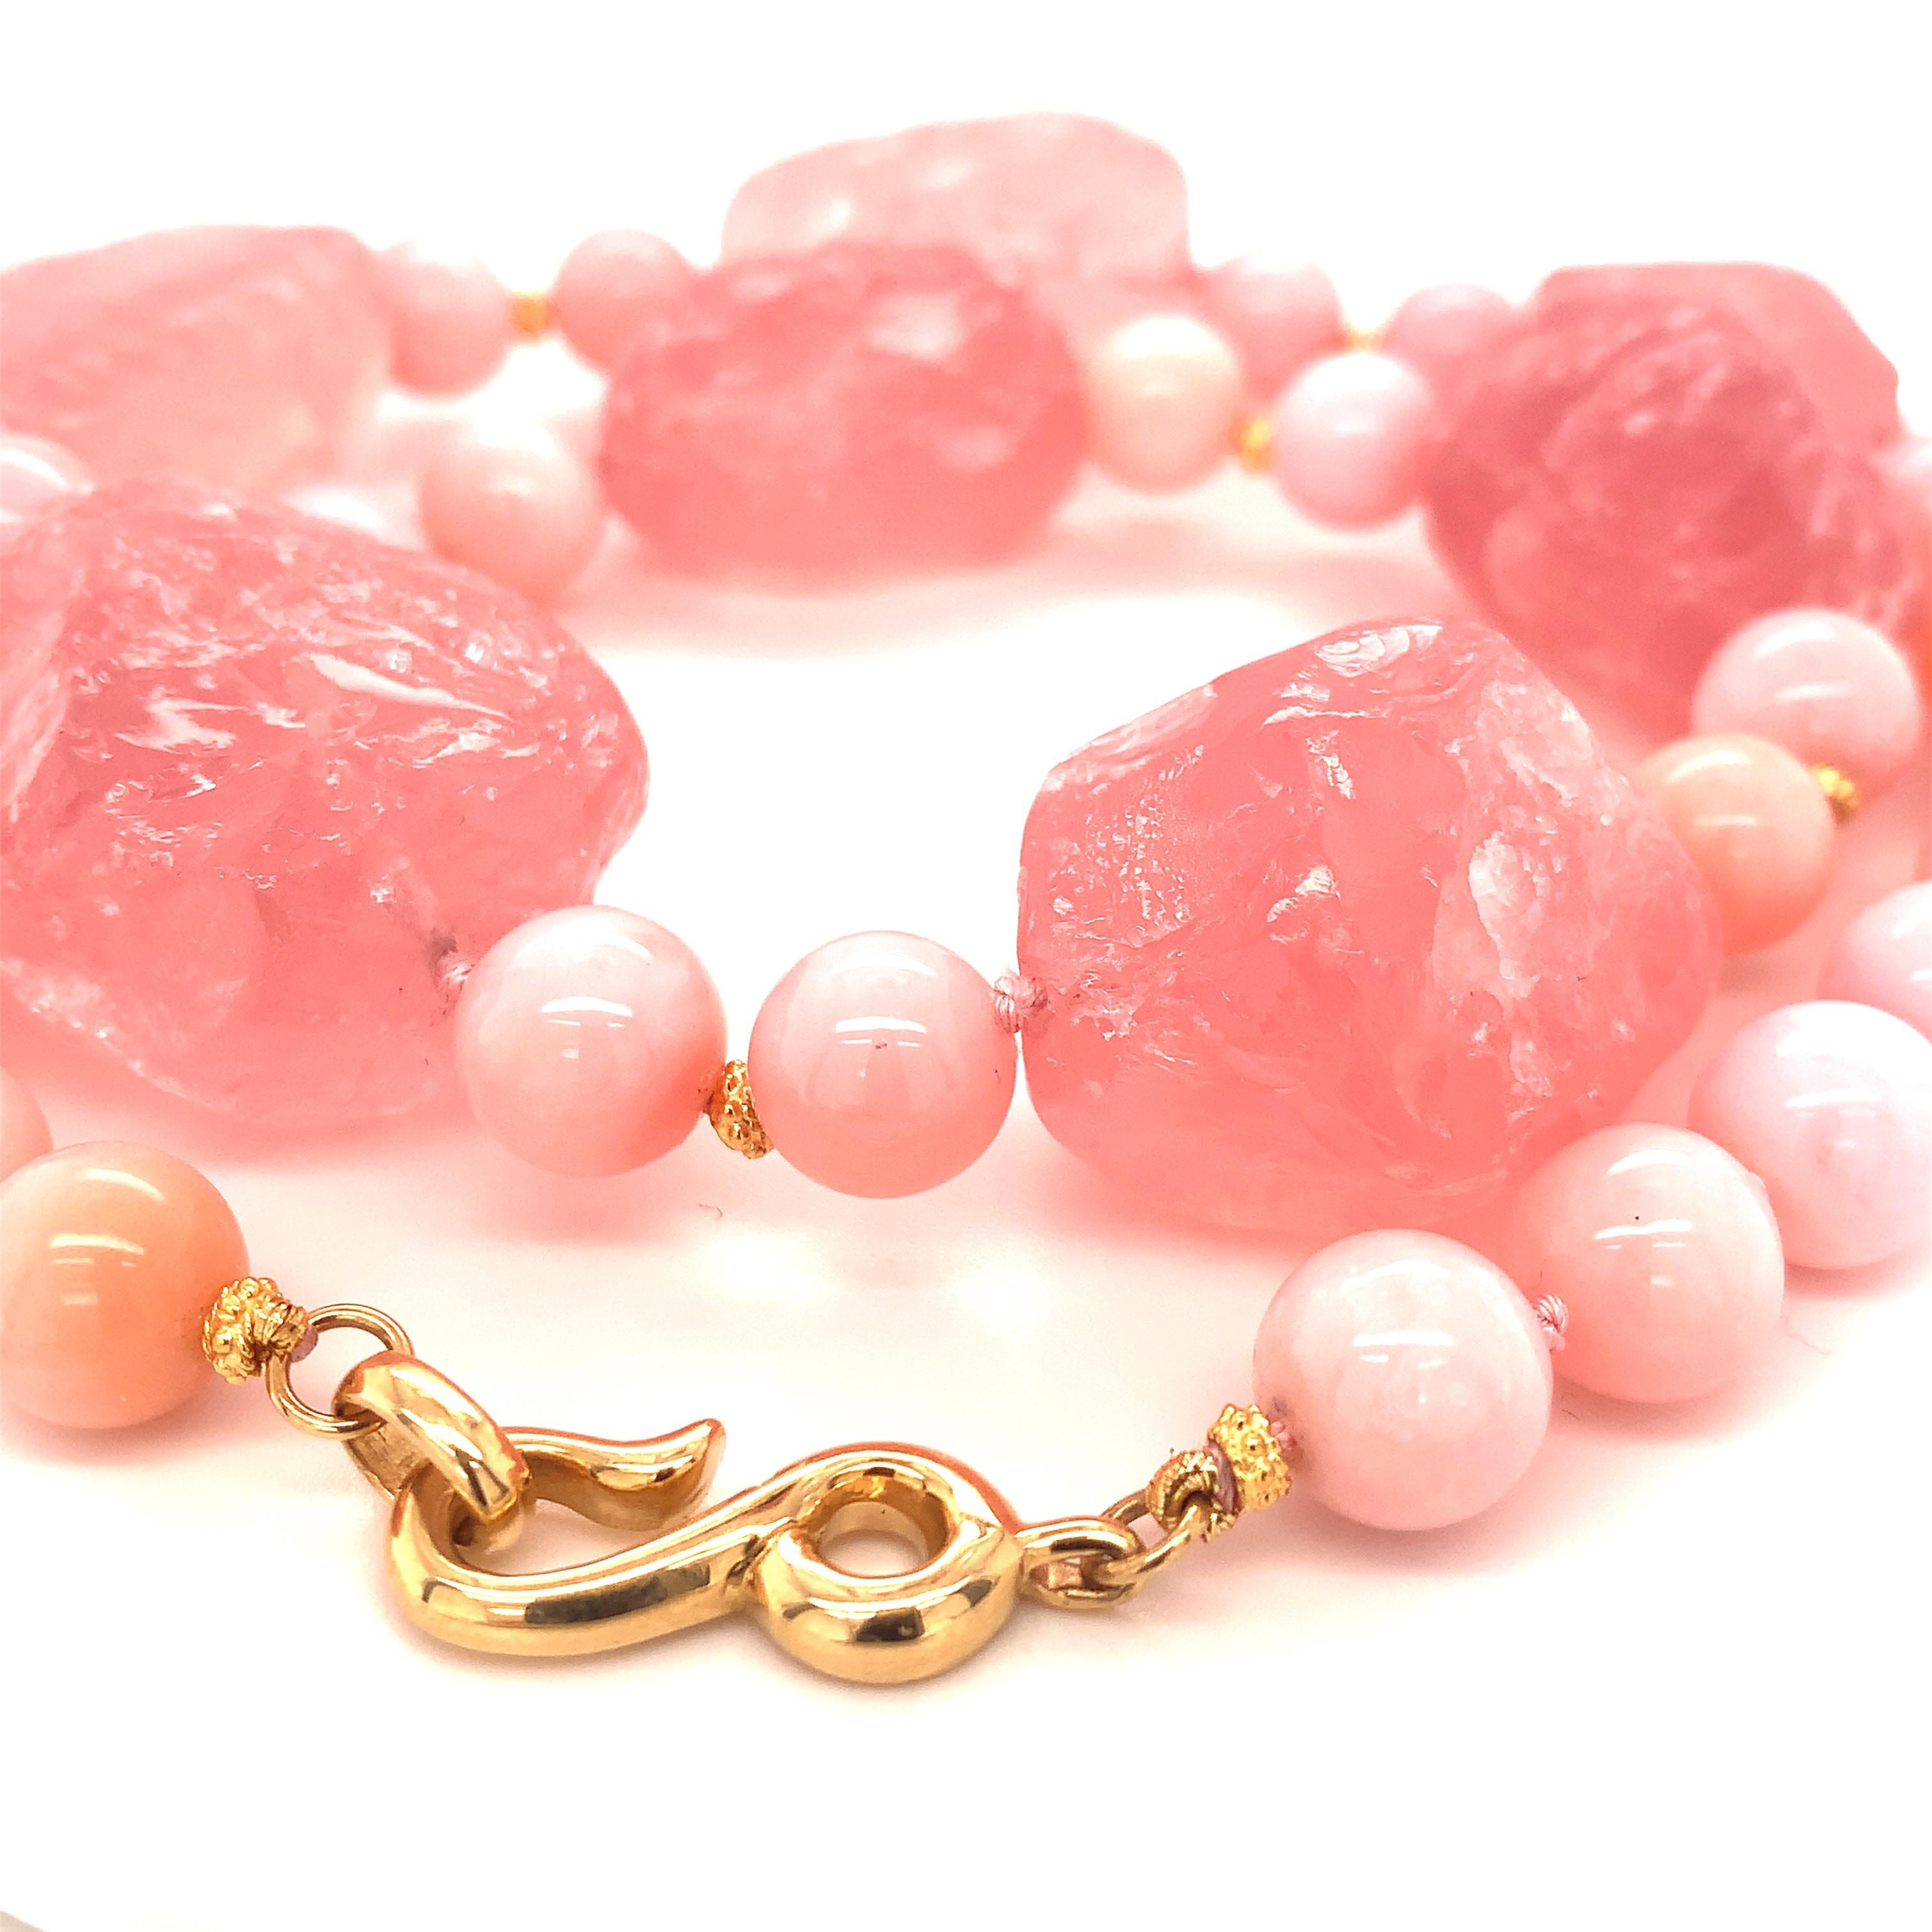 Artisan Rose Quartz Nugget, Pink Opal Bead Necklace, 156 Grams